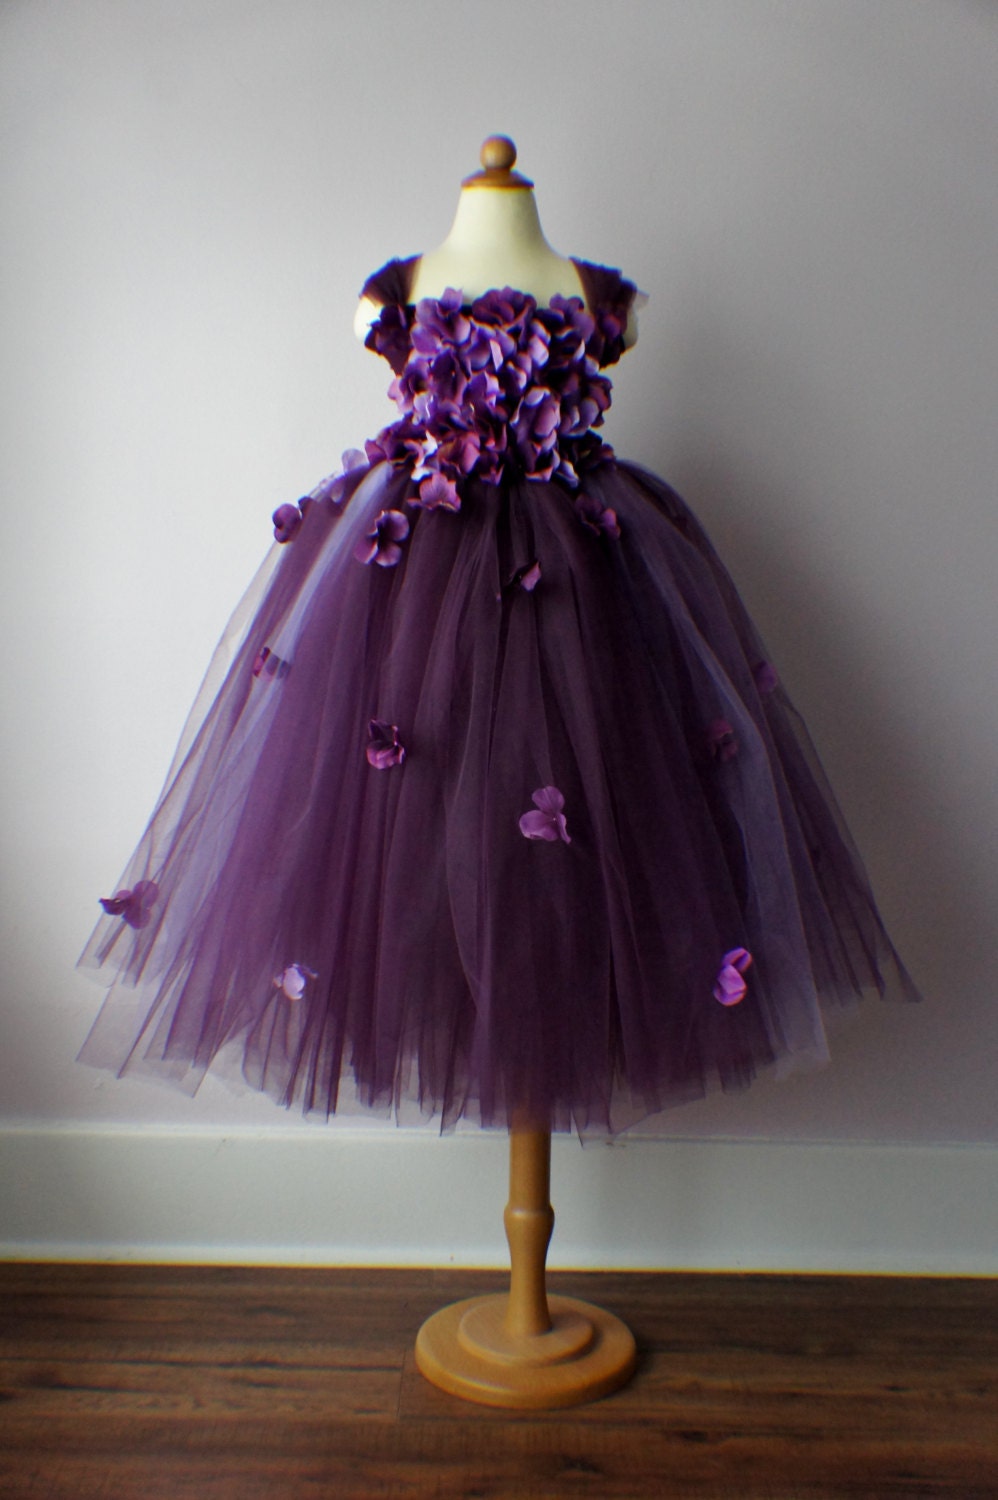 Stylish Dark Pink Color Thread Sequence Work Gown - Clothsvi